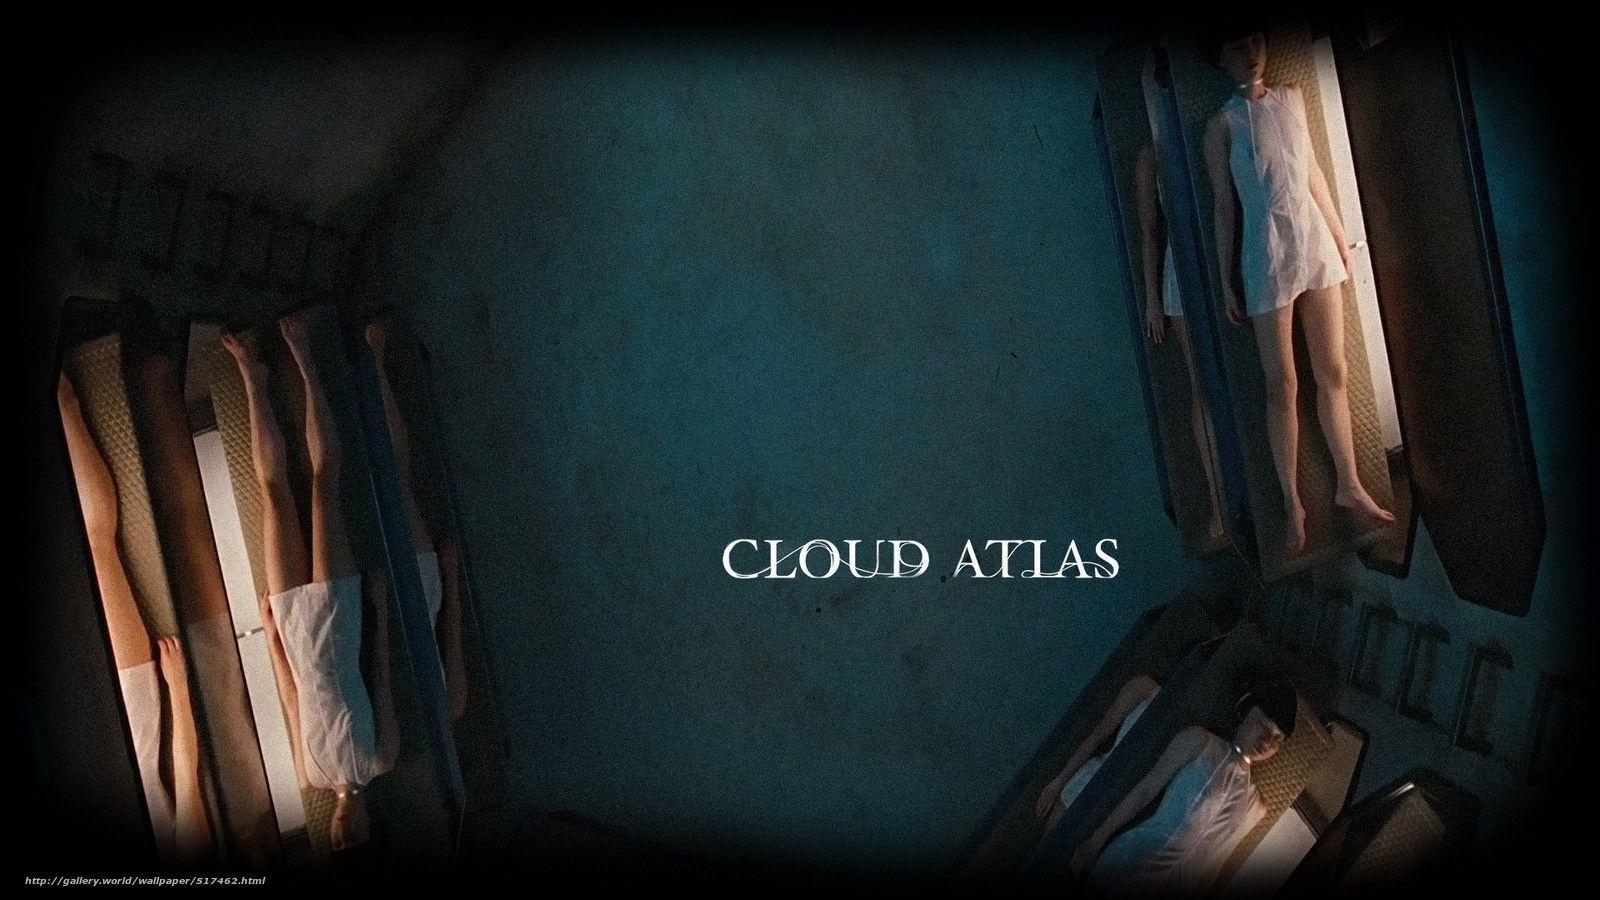 Download wallpaper manufactured goods, Cloud Atlas free desktop